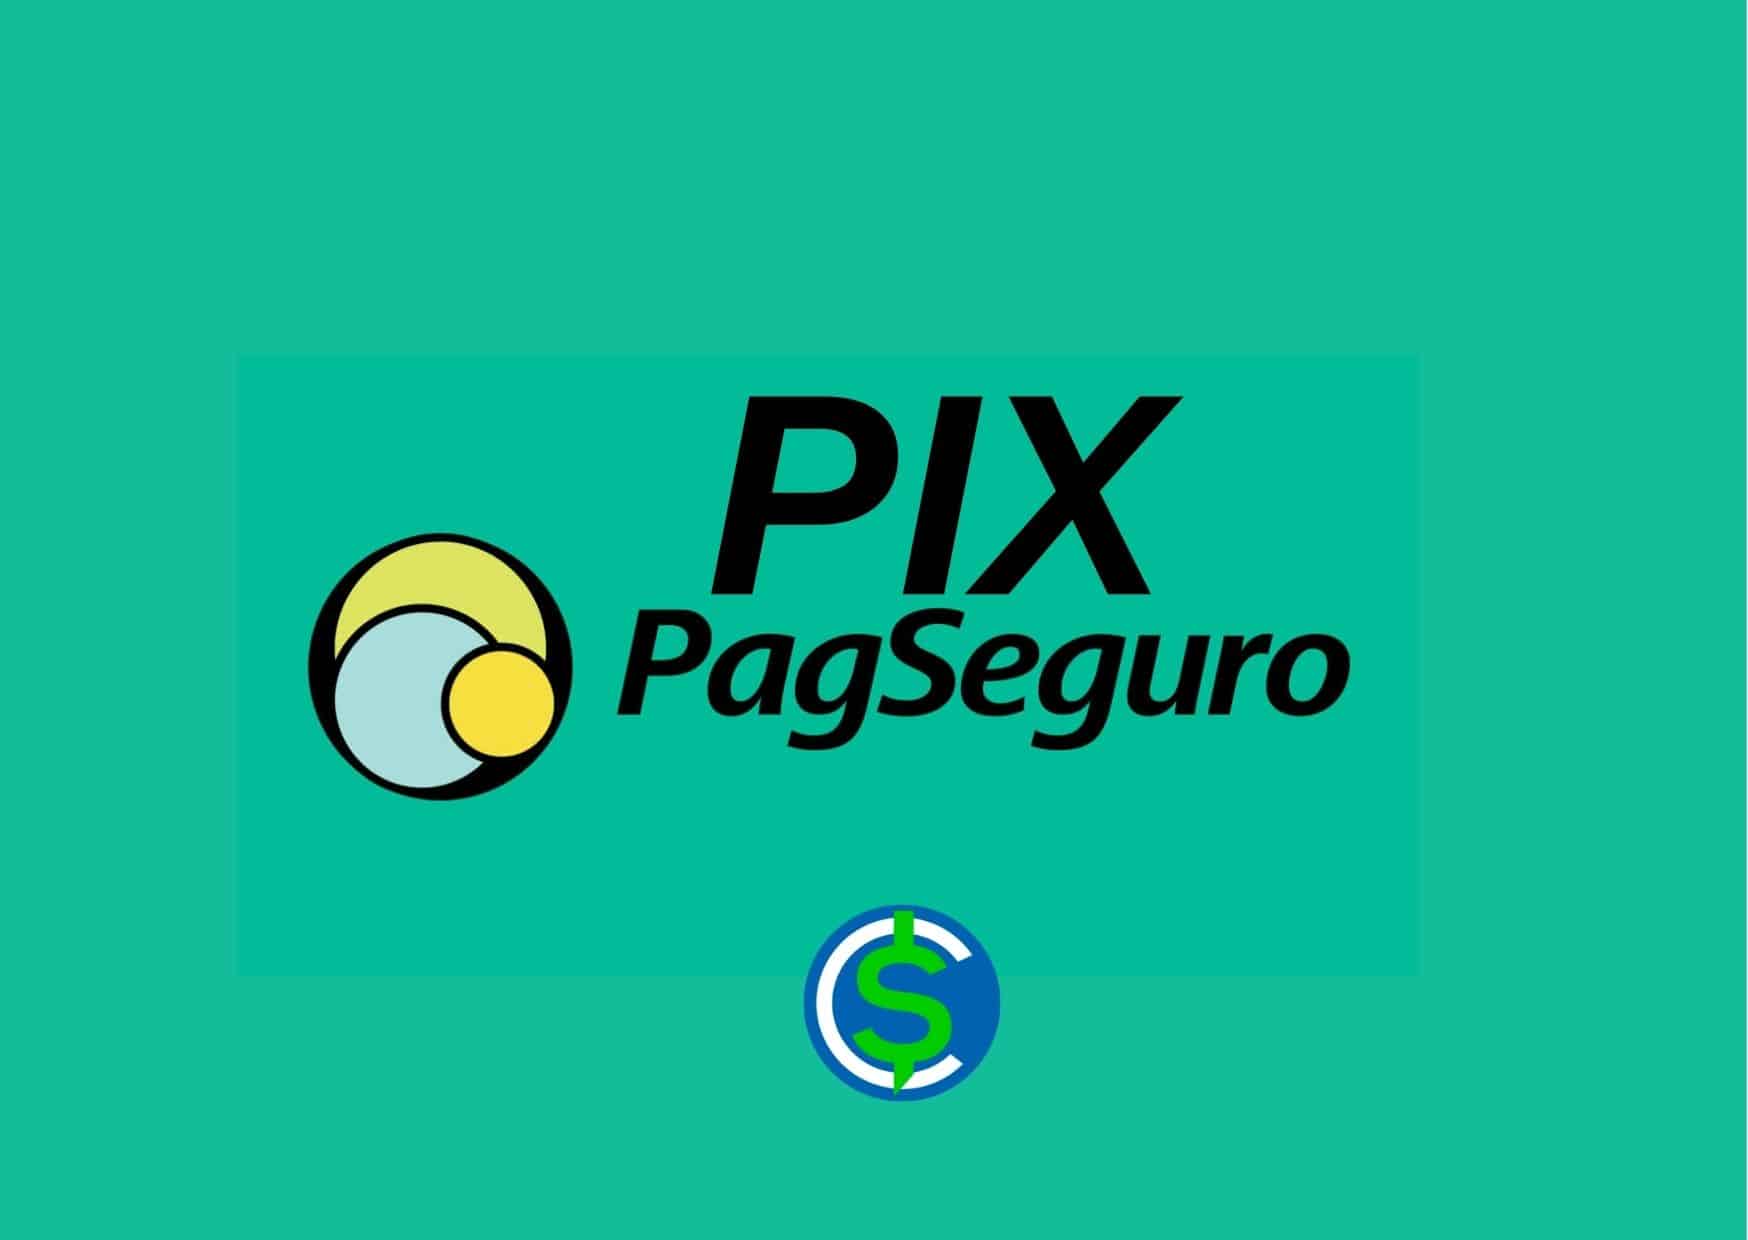 PIX PagSeguro